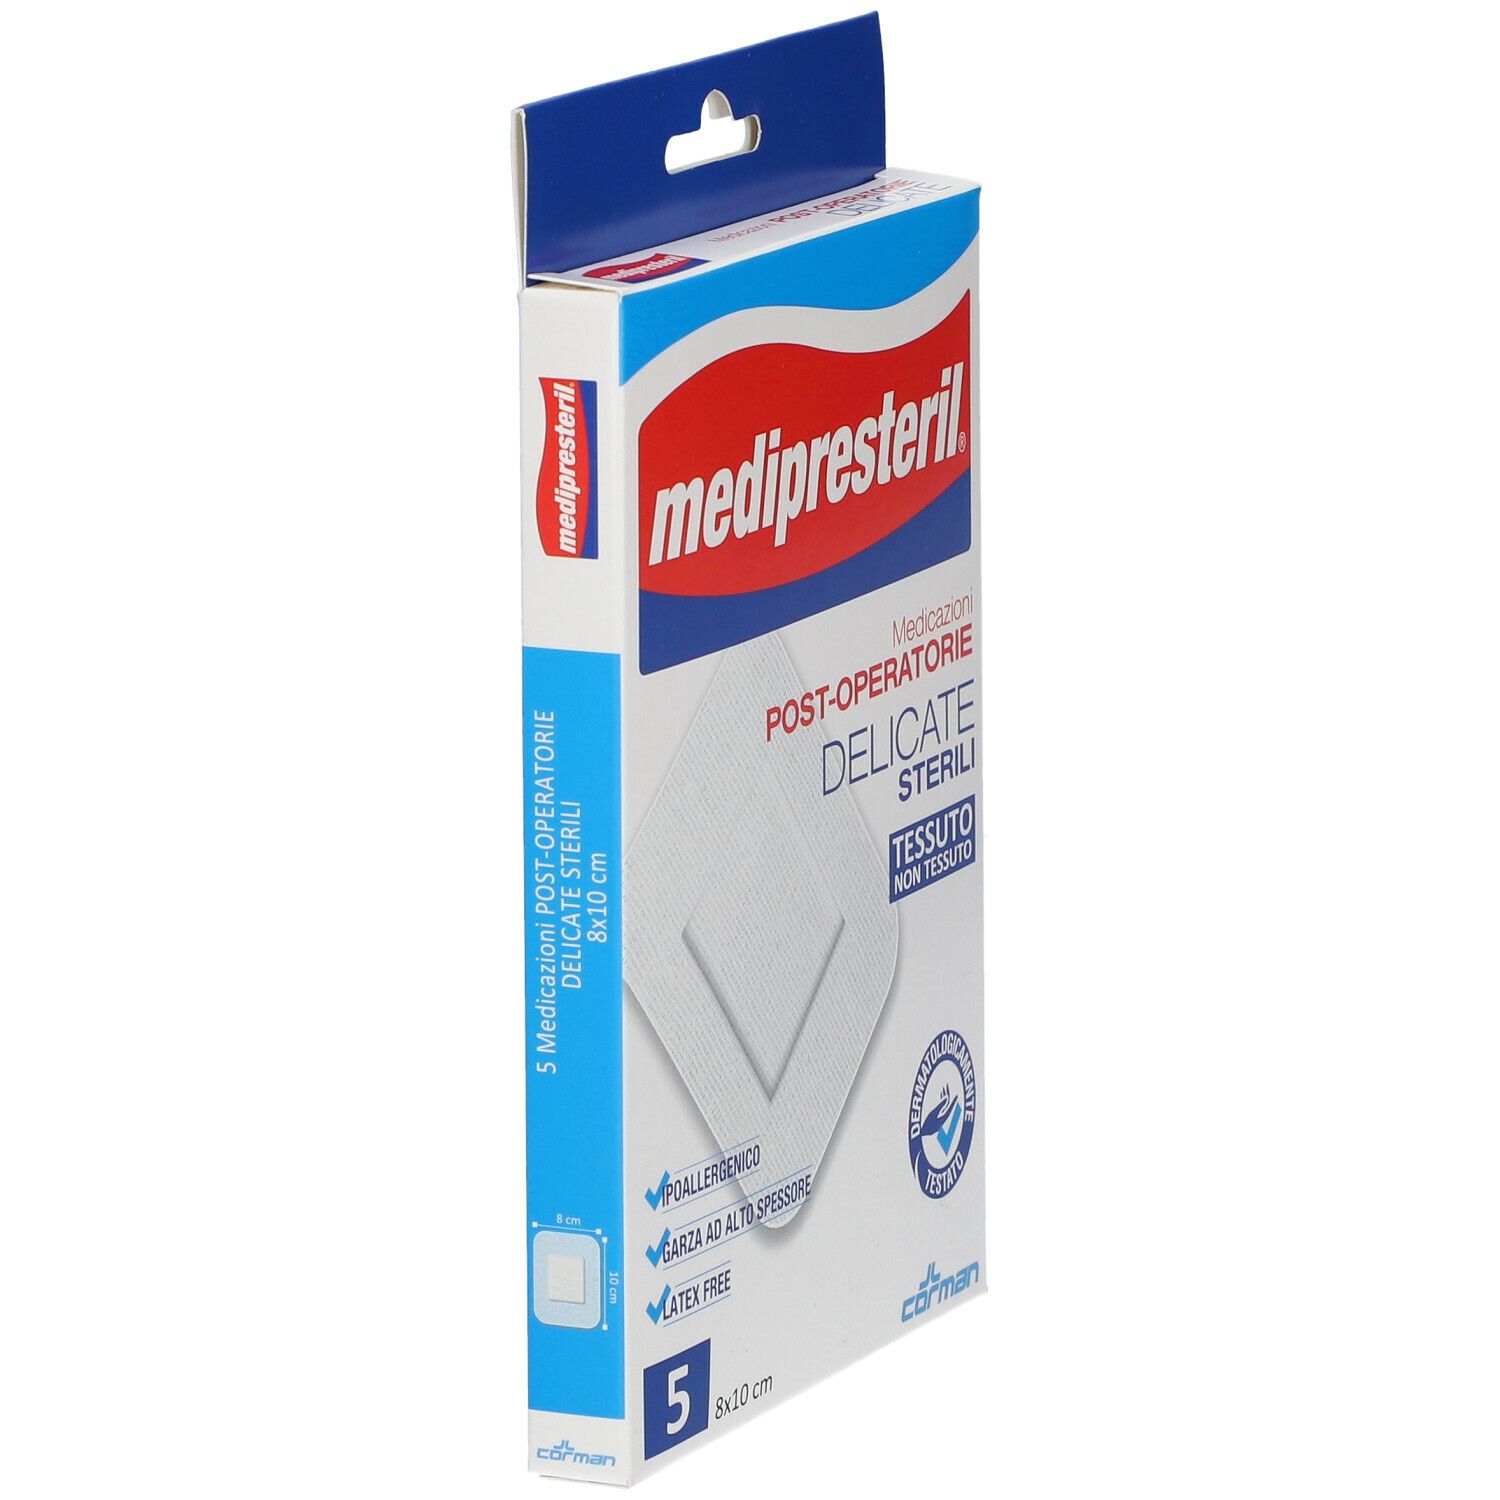 Medipresteril® Medicazioni Post Operatorie Delicate Sterili 8 x 10 cm